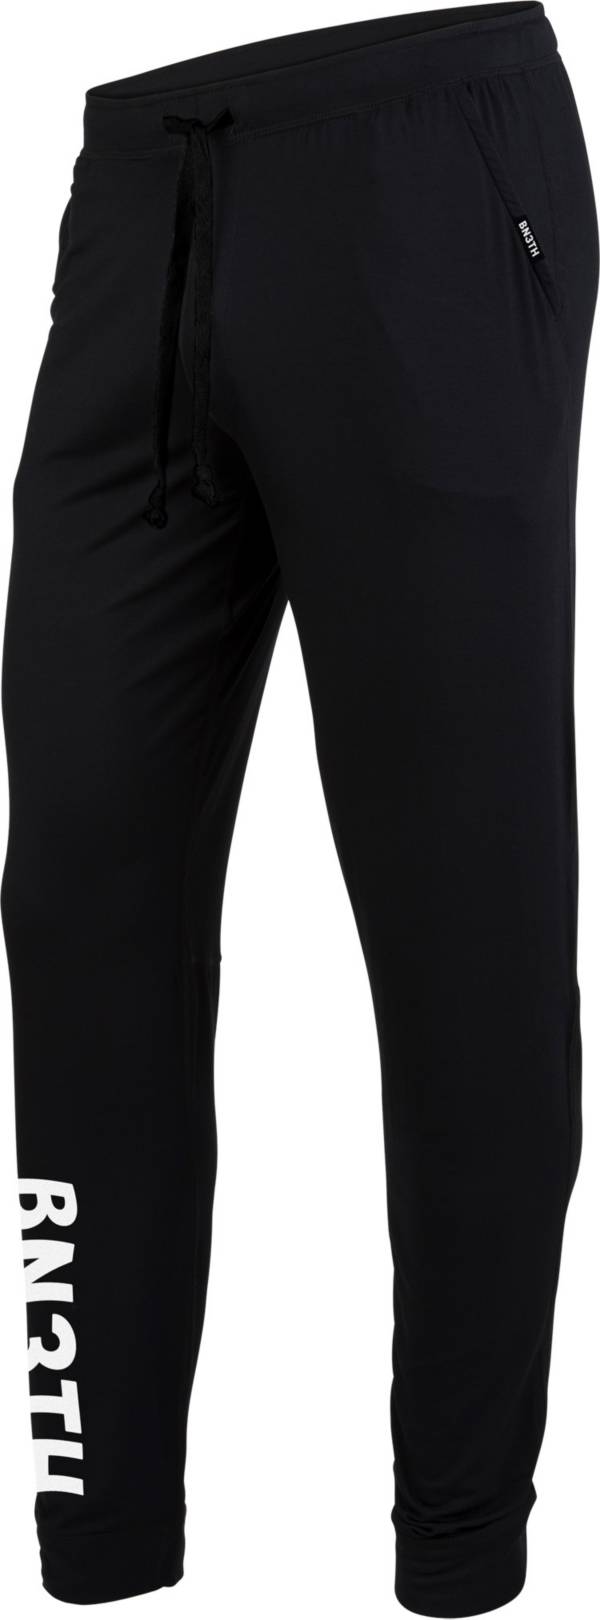 BN3TH Adult Sleepwear Pants product image